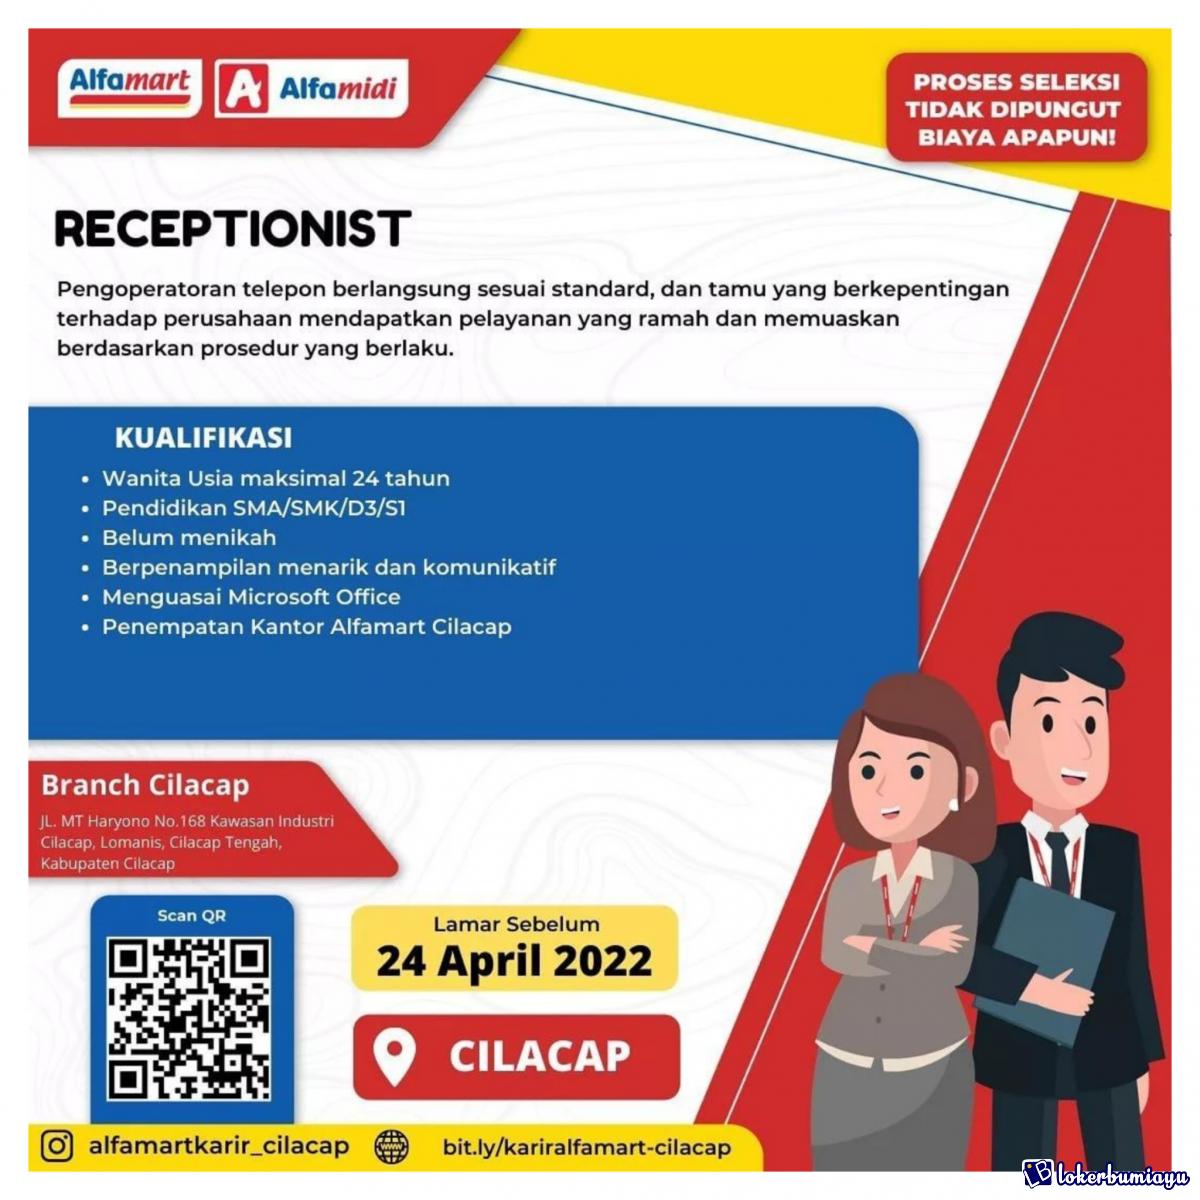 Alfamart branch Cilacap